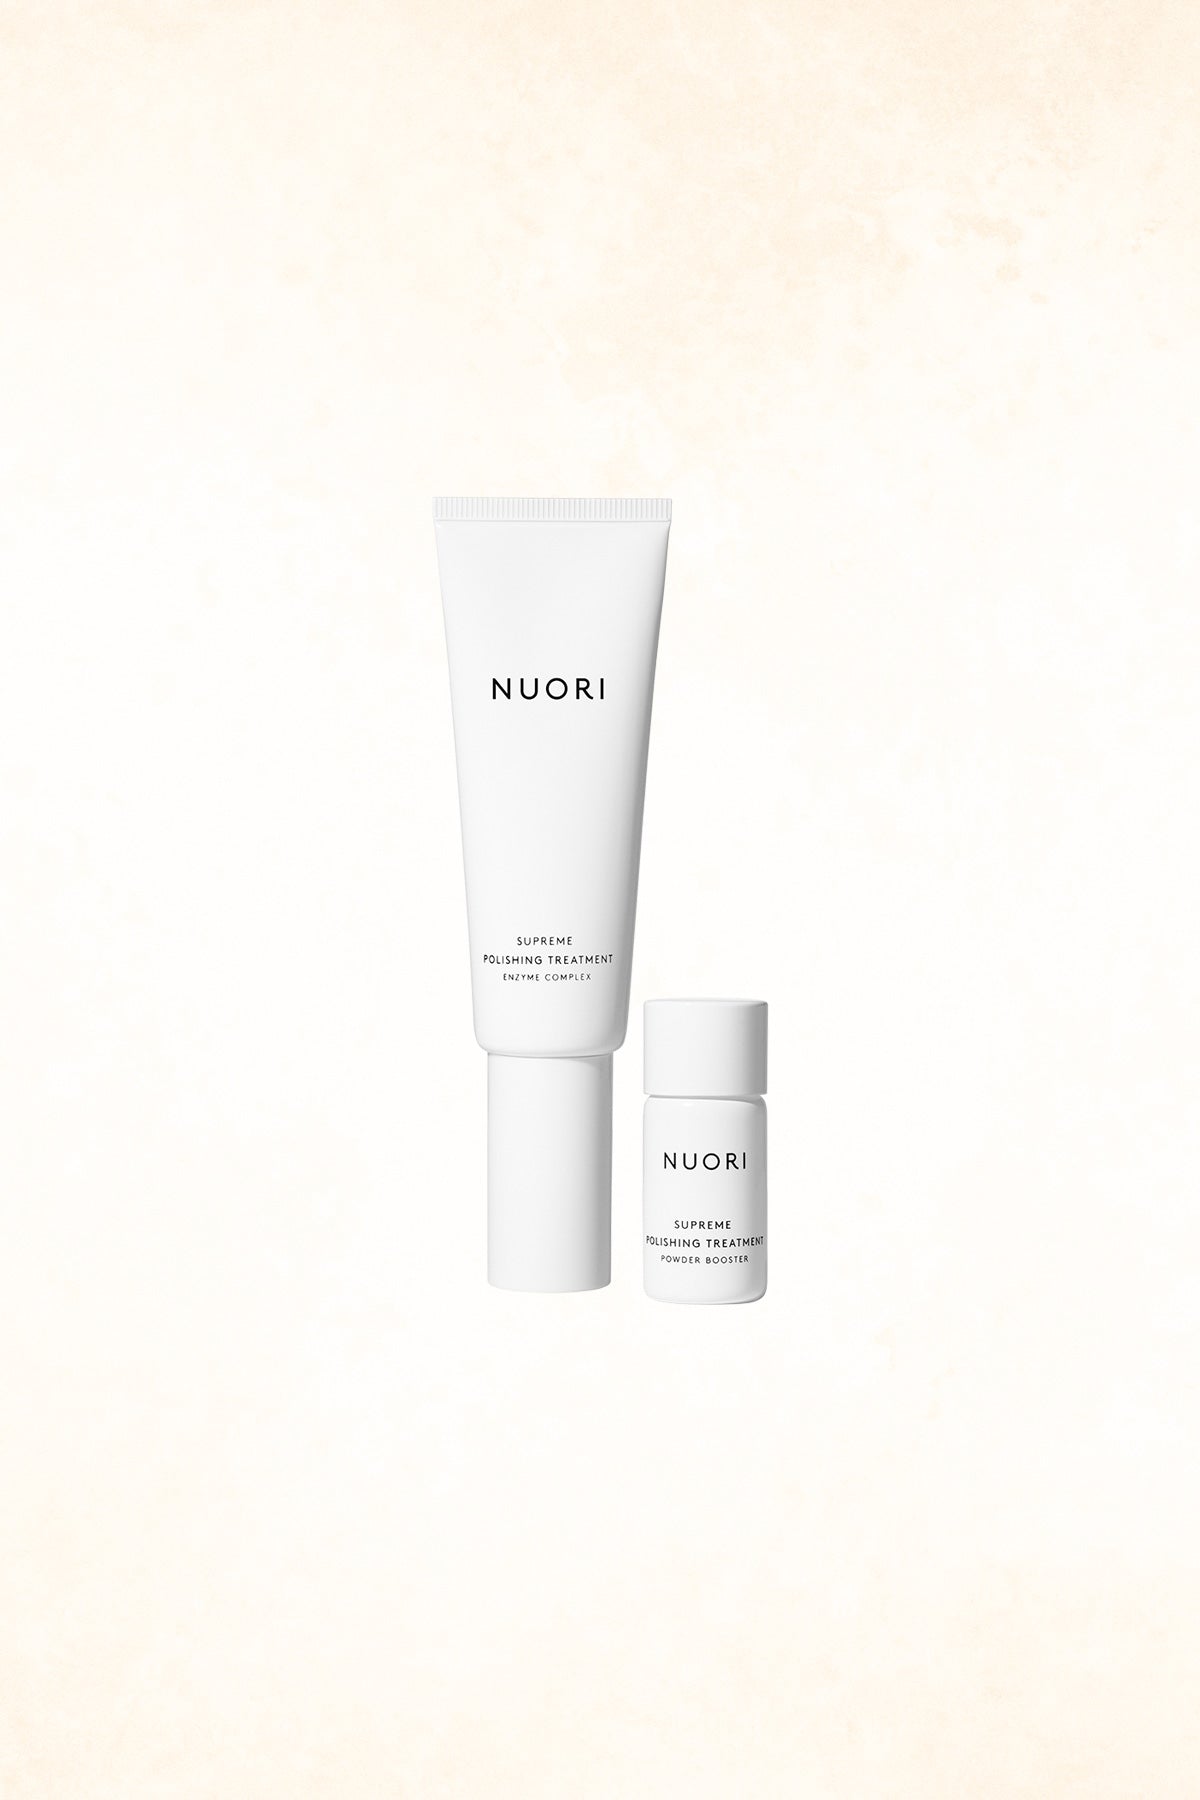 Nuori – Supreme Polishing Treatment – 45 ml